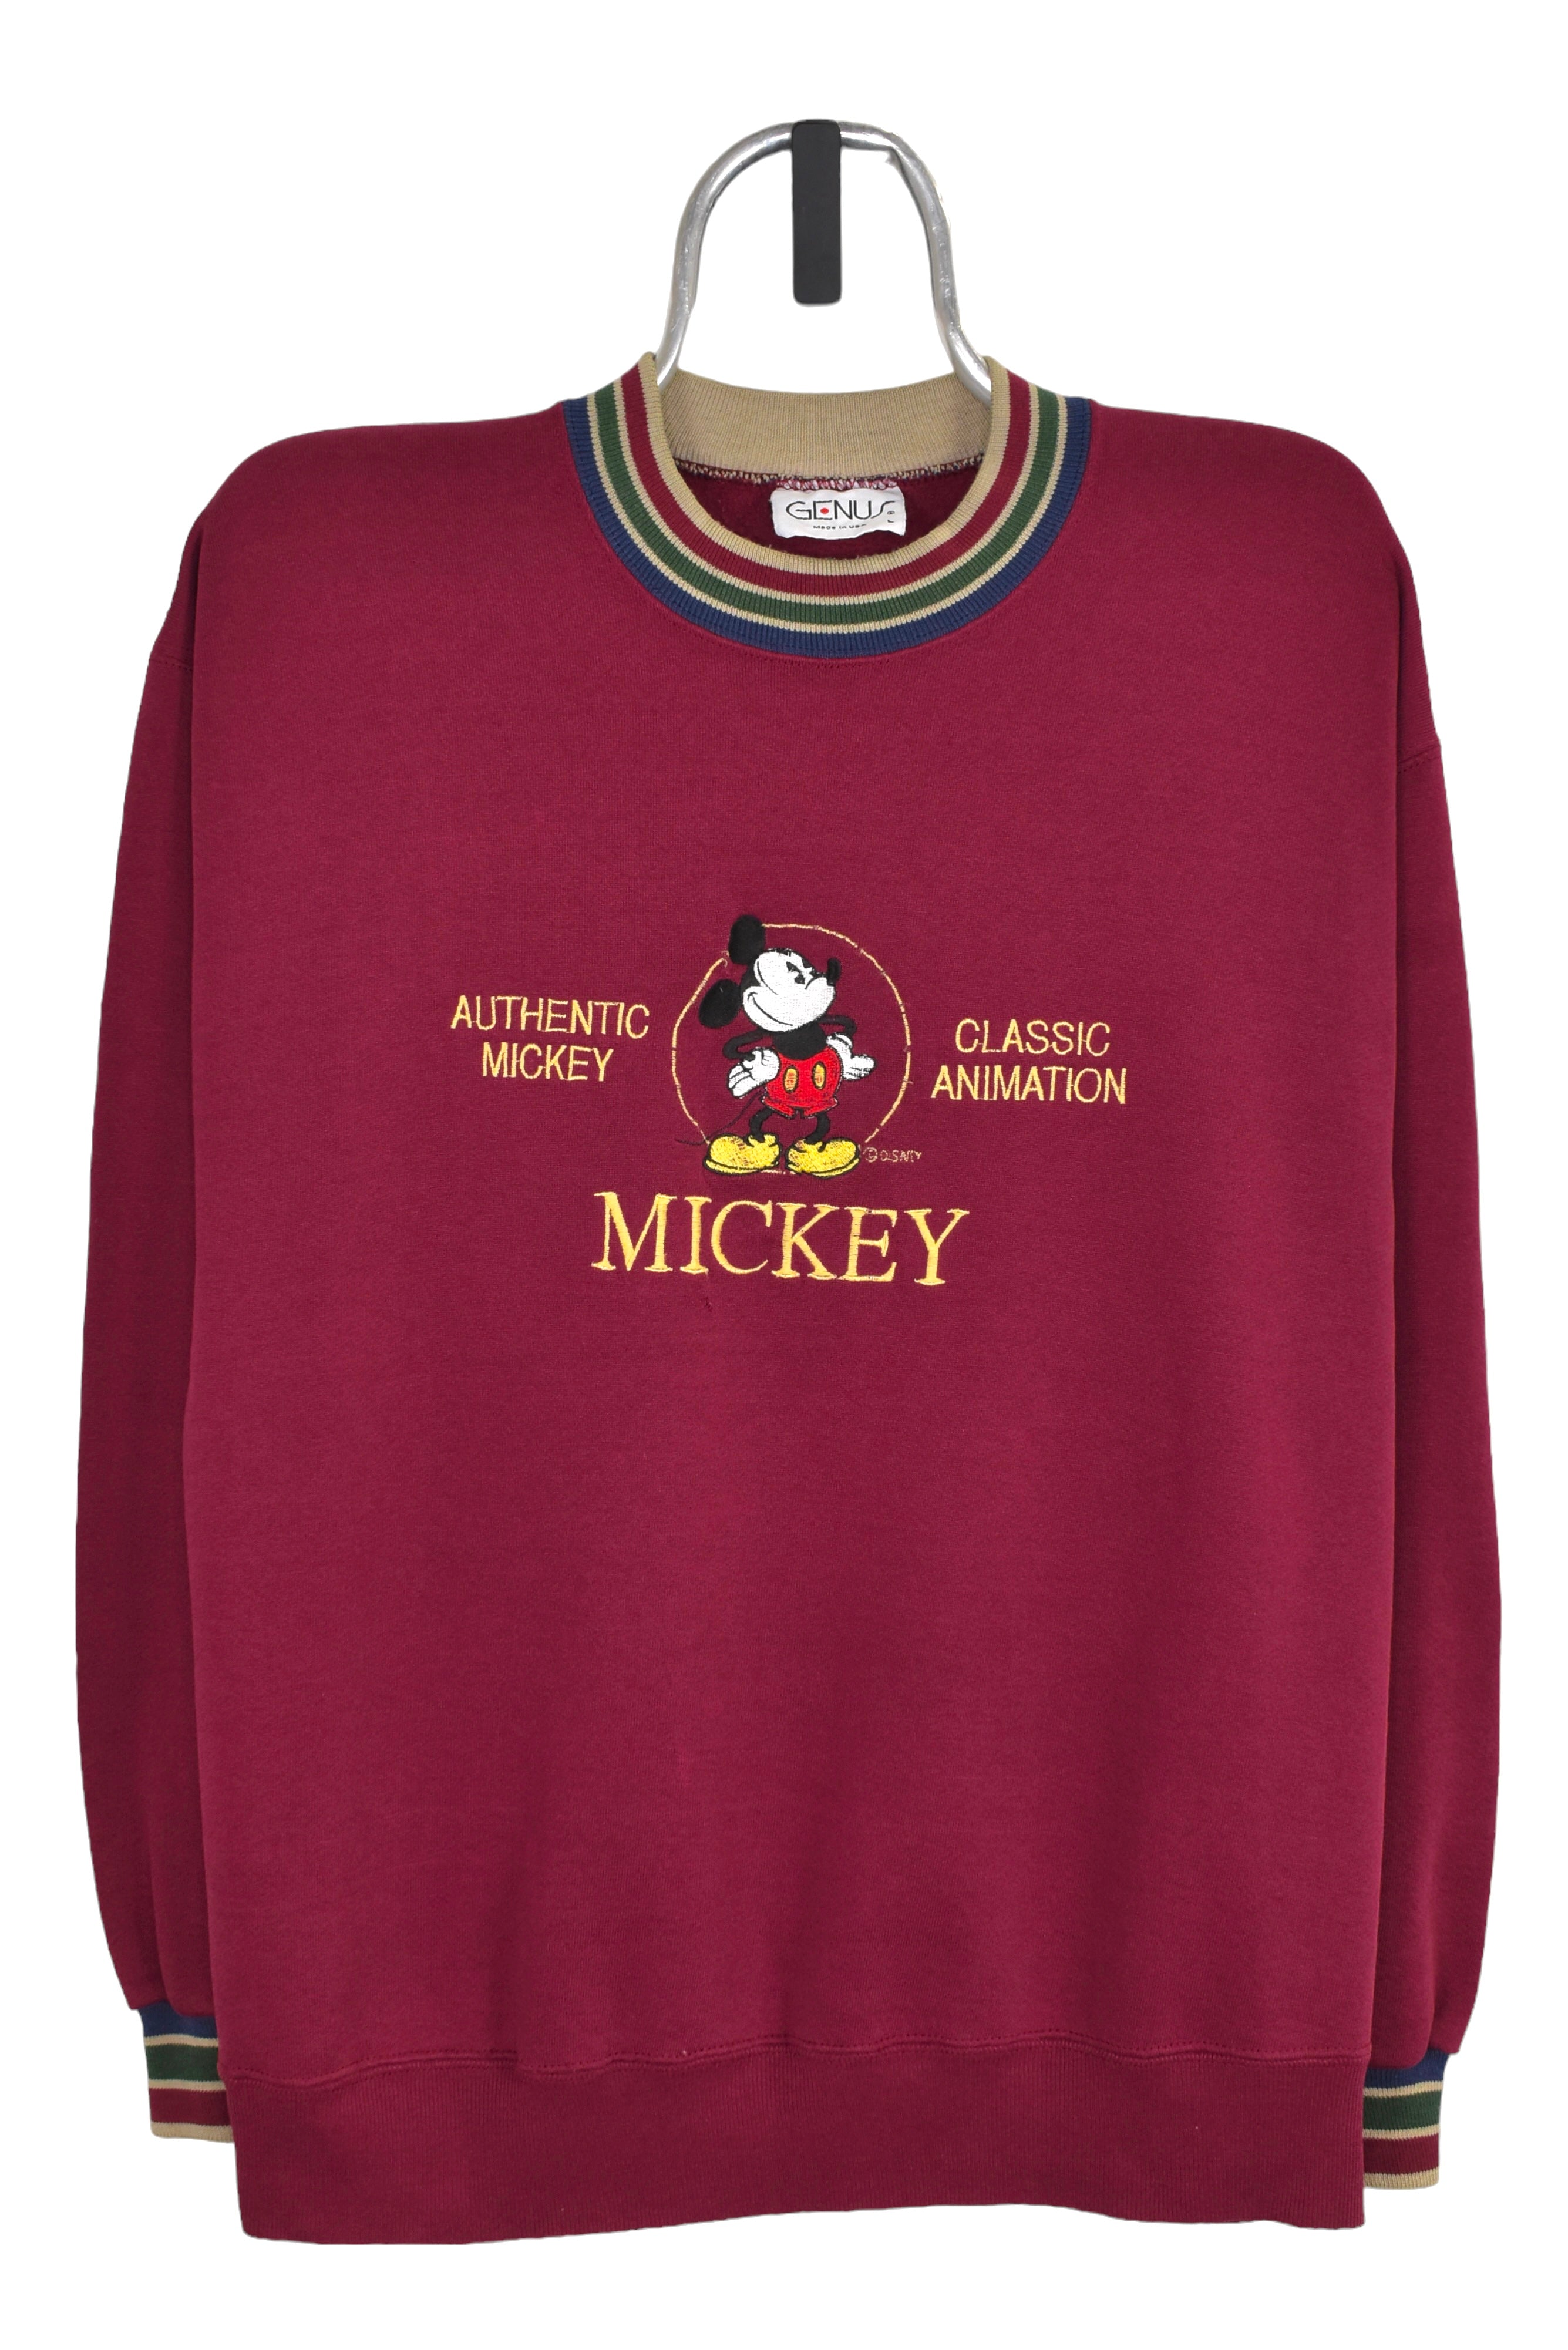 Vintage Mickey Mouse sweatshirt (L), Disney embroidered crewneck